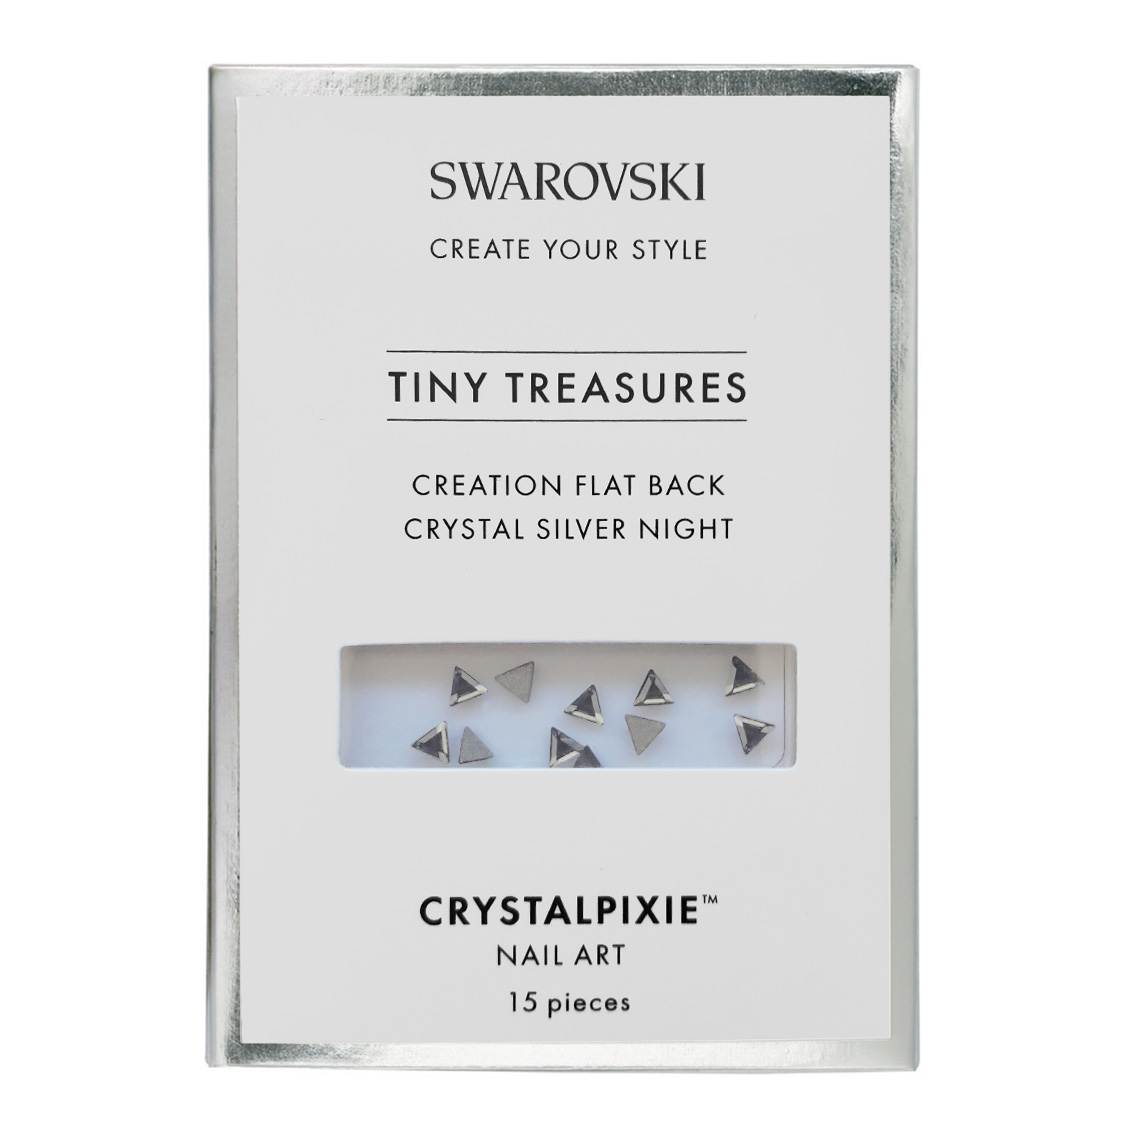 Creation Flat Back - Crystal Silver Night 15 pz - Swarovski Tiny Treasures